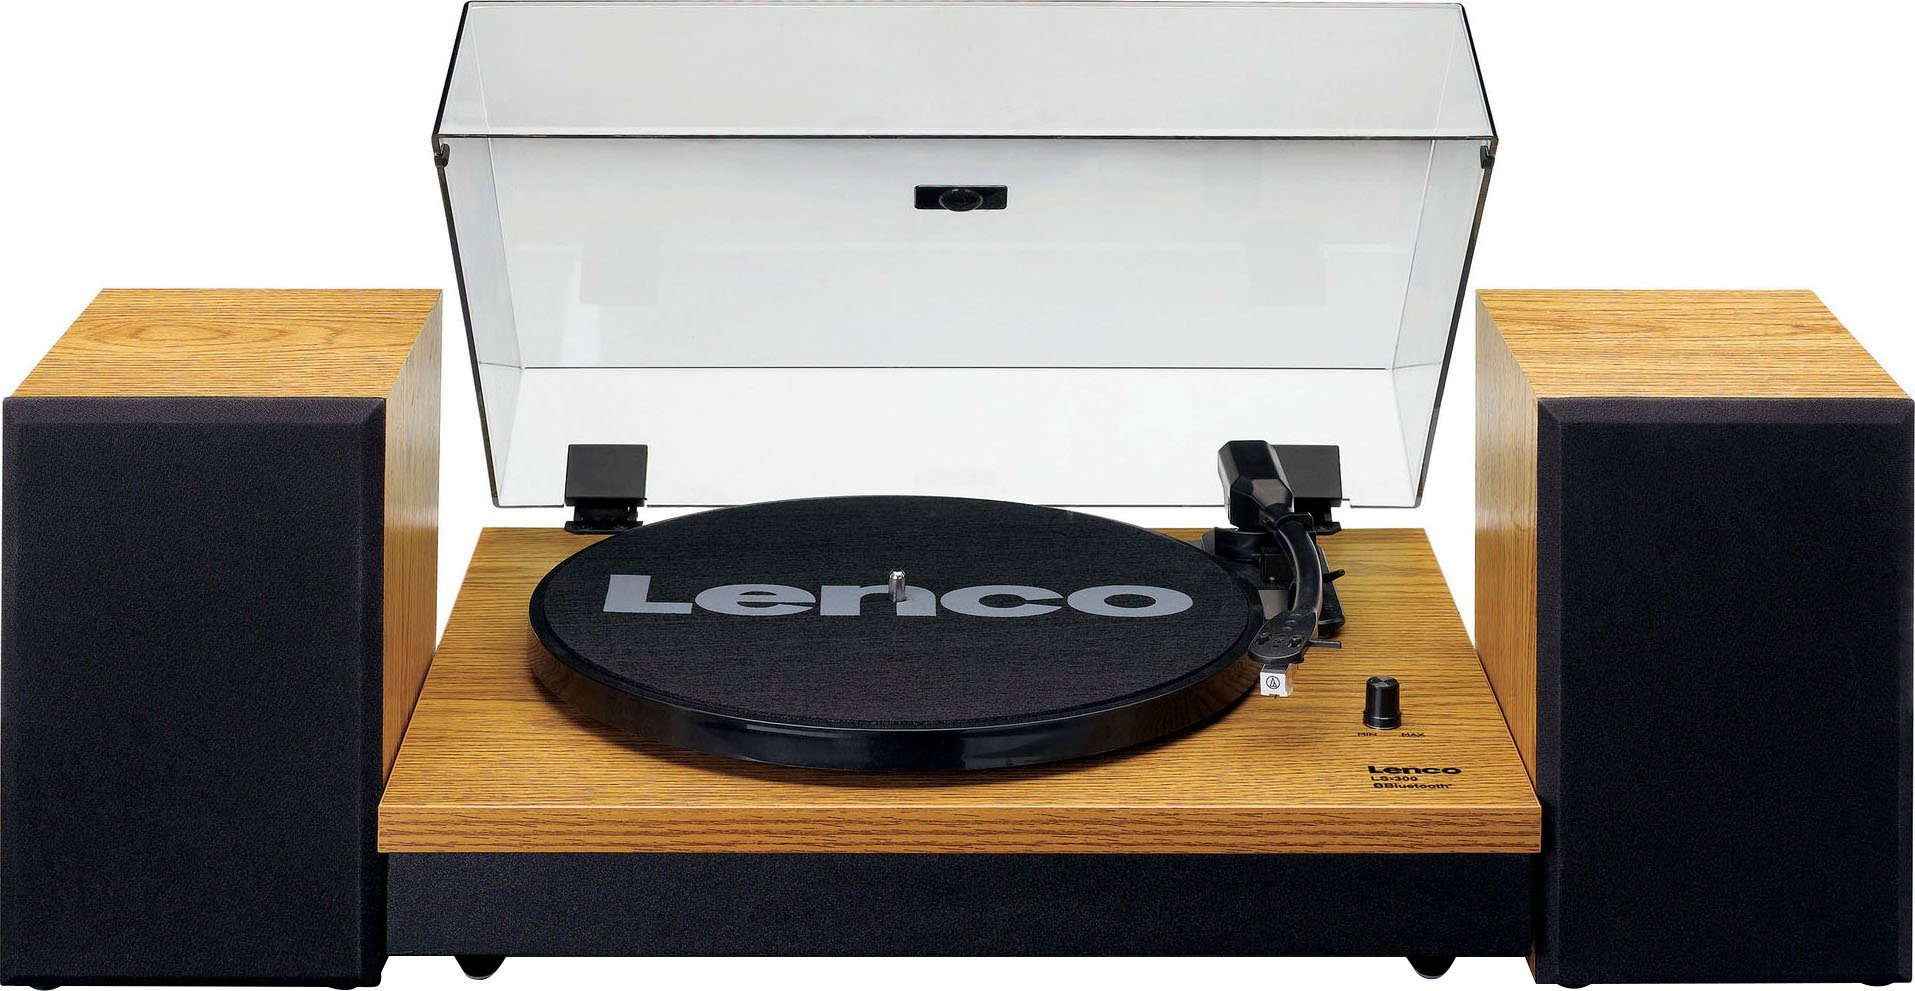 Lenco LS-300WD Plattenspieler Holz (Riemenantrieb) Lautsprechern mit Plattenspieler ext